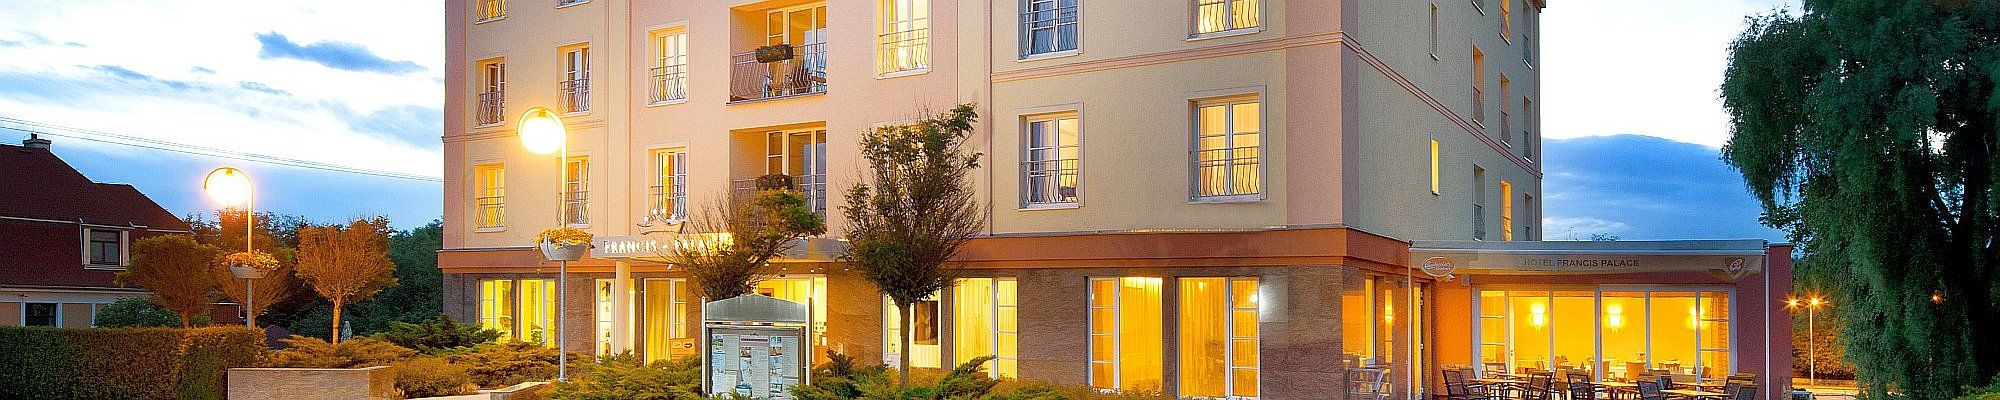 Francis - Palace Spa & Wellness Hotel - Kururlaub in Franzensbad mit Haustürabholung